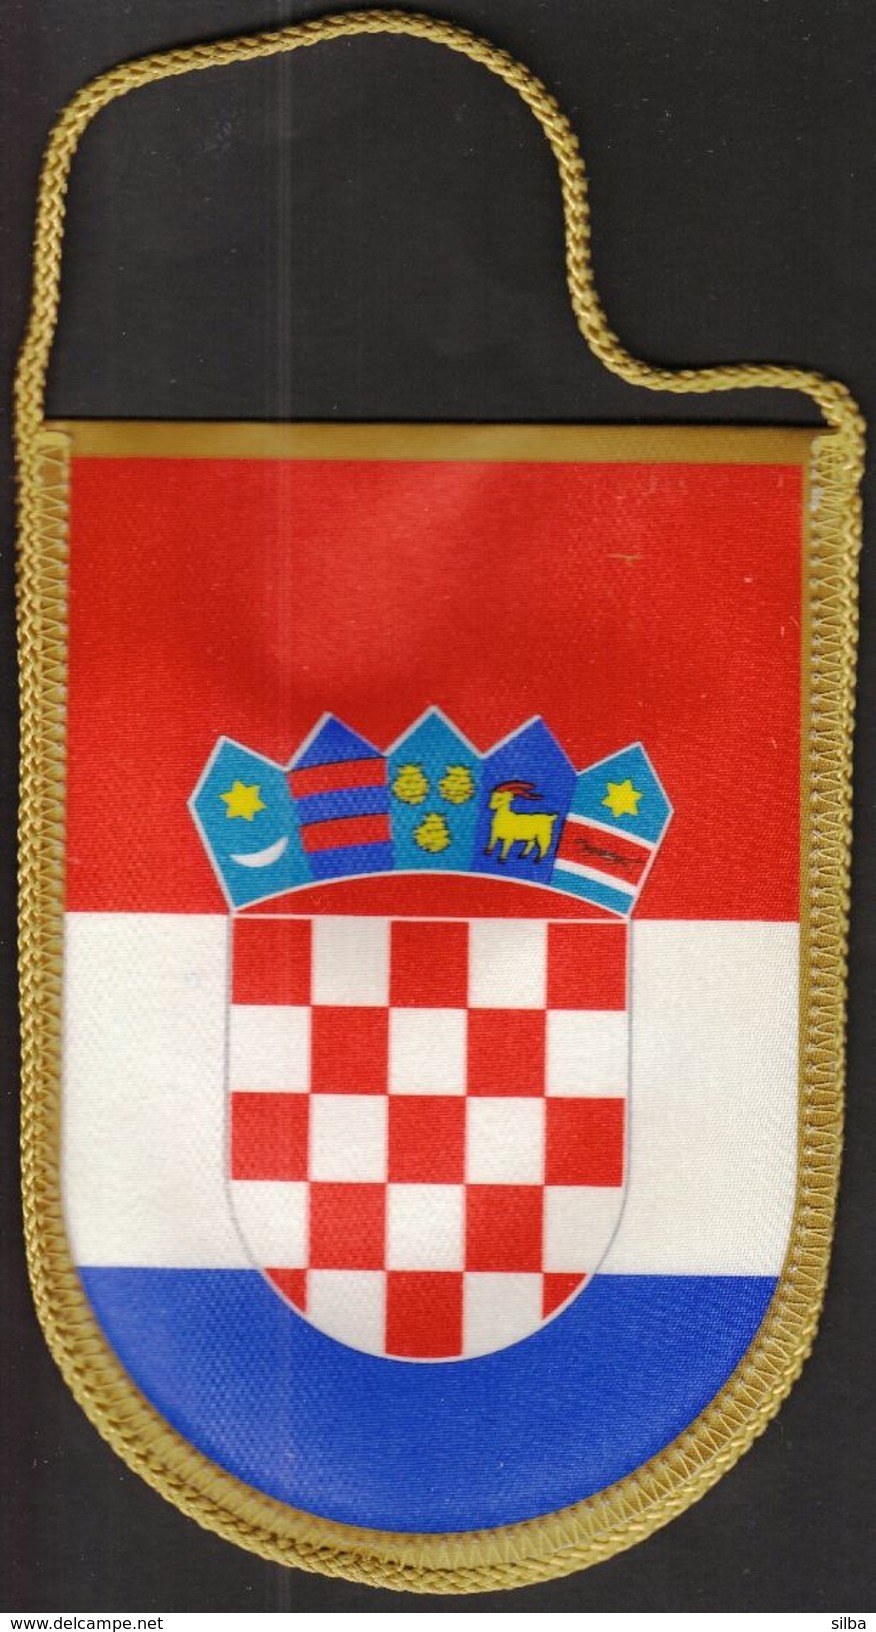 Basketball / Flag, Pennant / Croatia / Croatian Basketball Federation / HKS - Habillement, Souvenirs & Autres